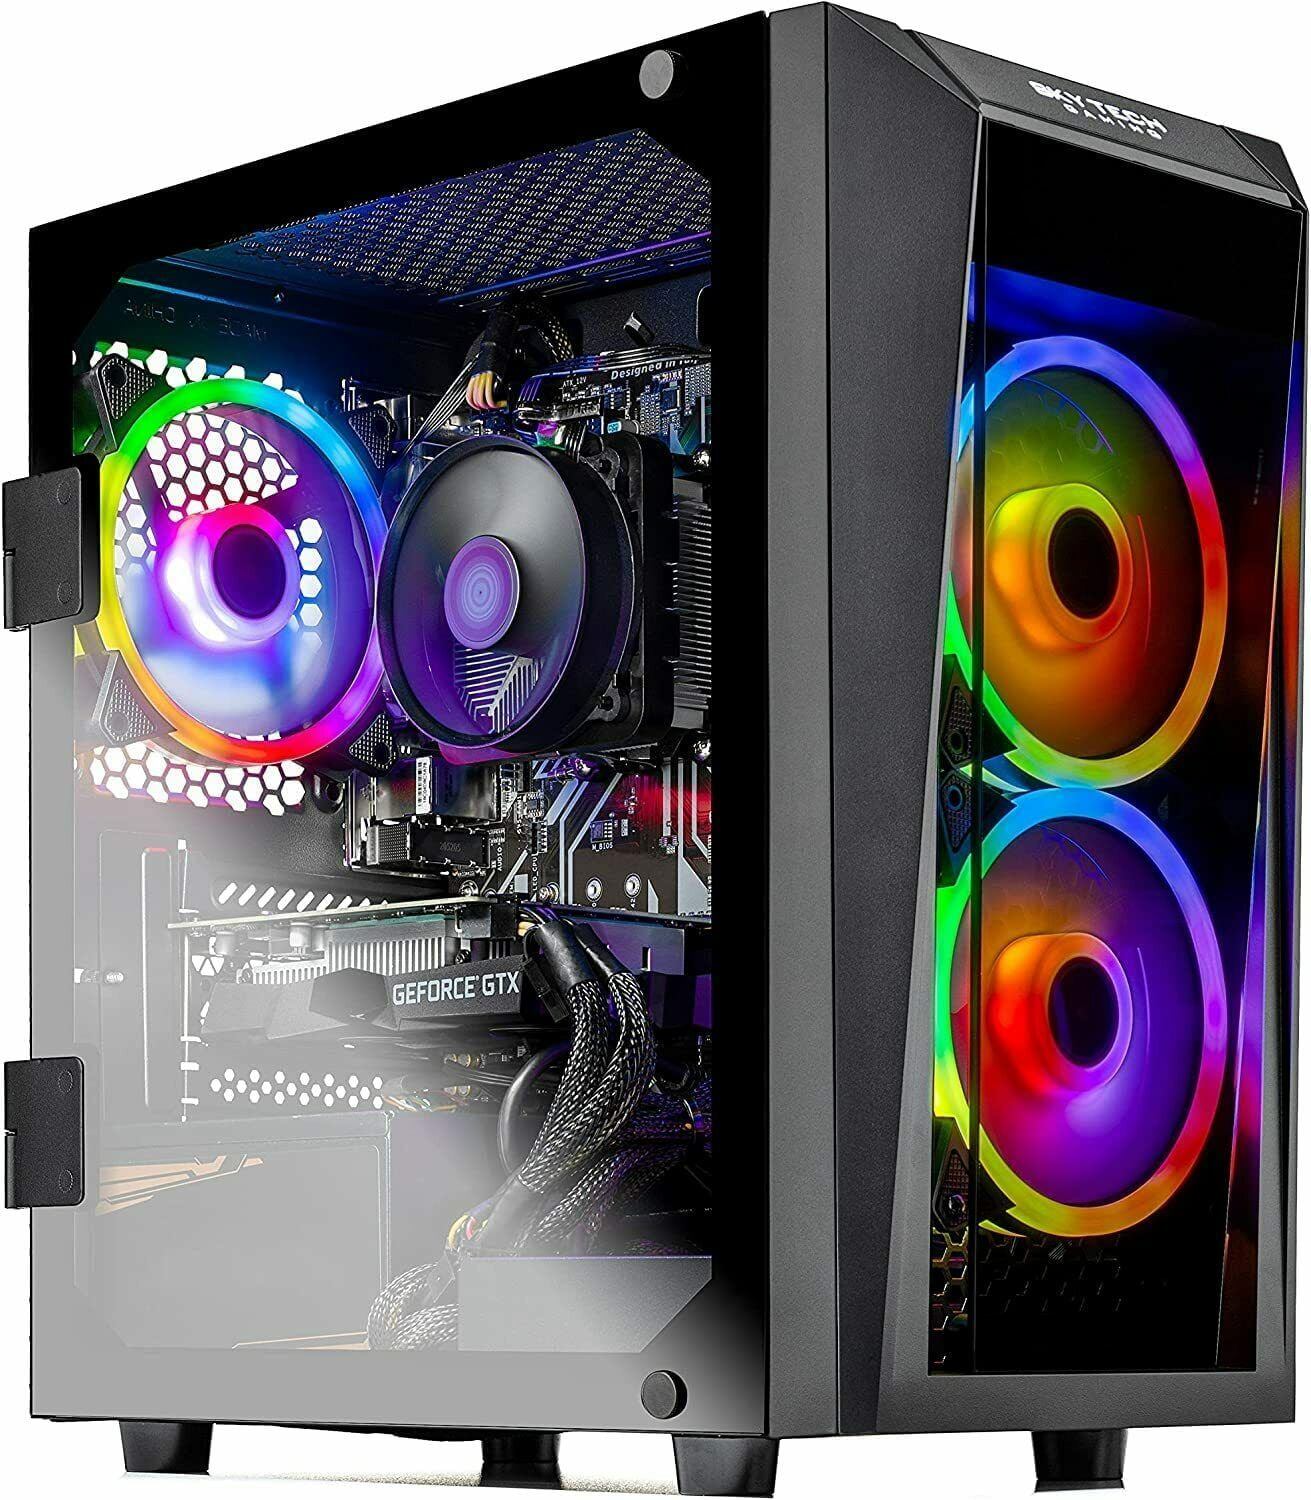 Skytech Blaze ll Gaming PC Desktop – Intel i5-10400F, GTX 1660, 1TB NVME,  16G DDR4 3200, AC Wi-Fi, Windows 10 Home 64-bit, Black